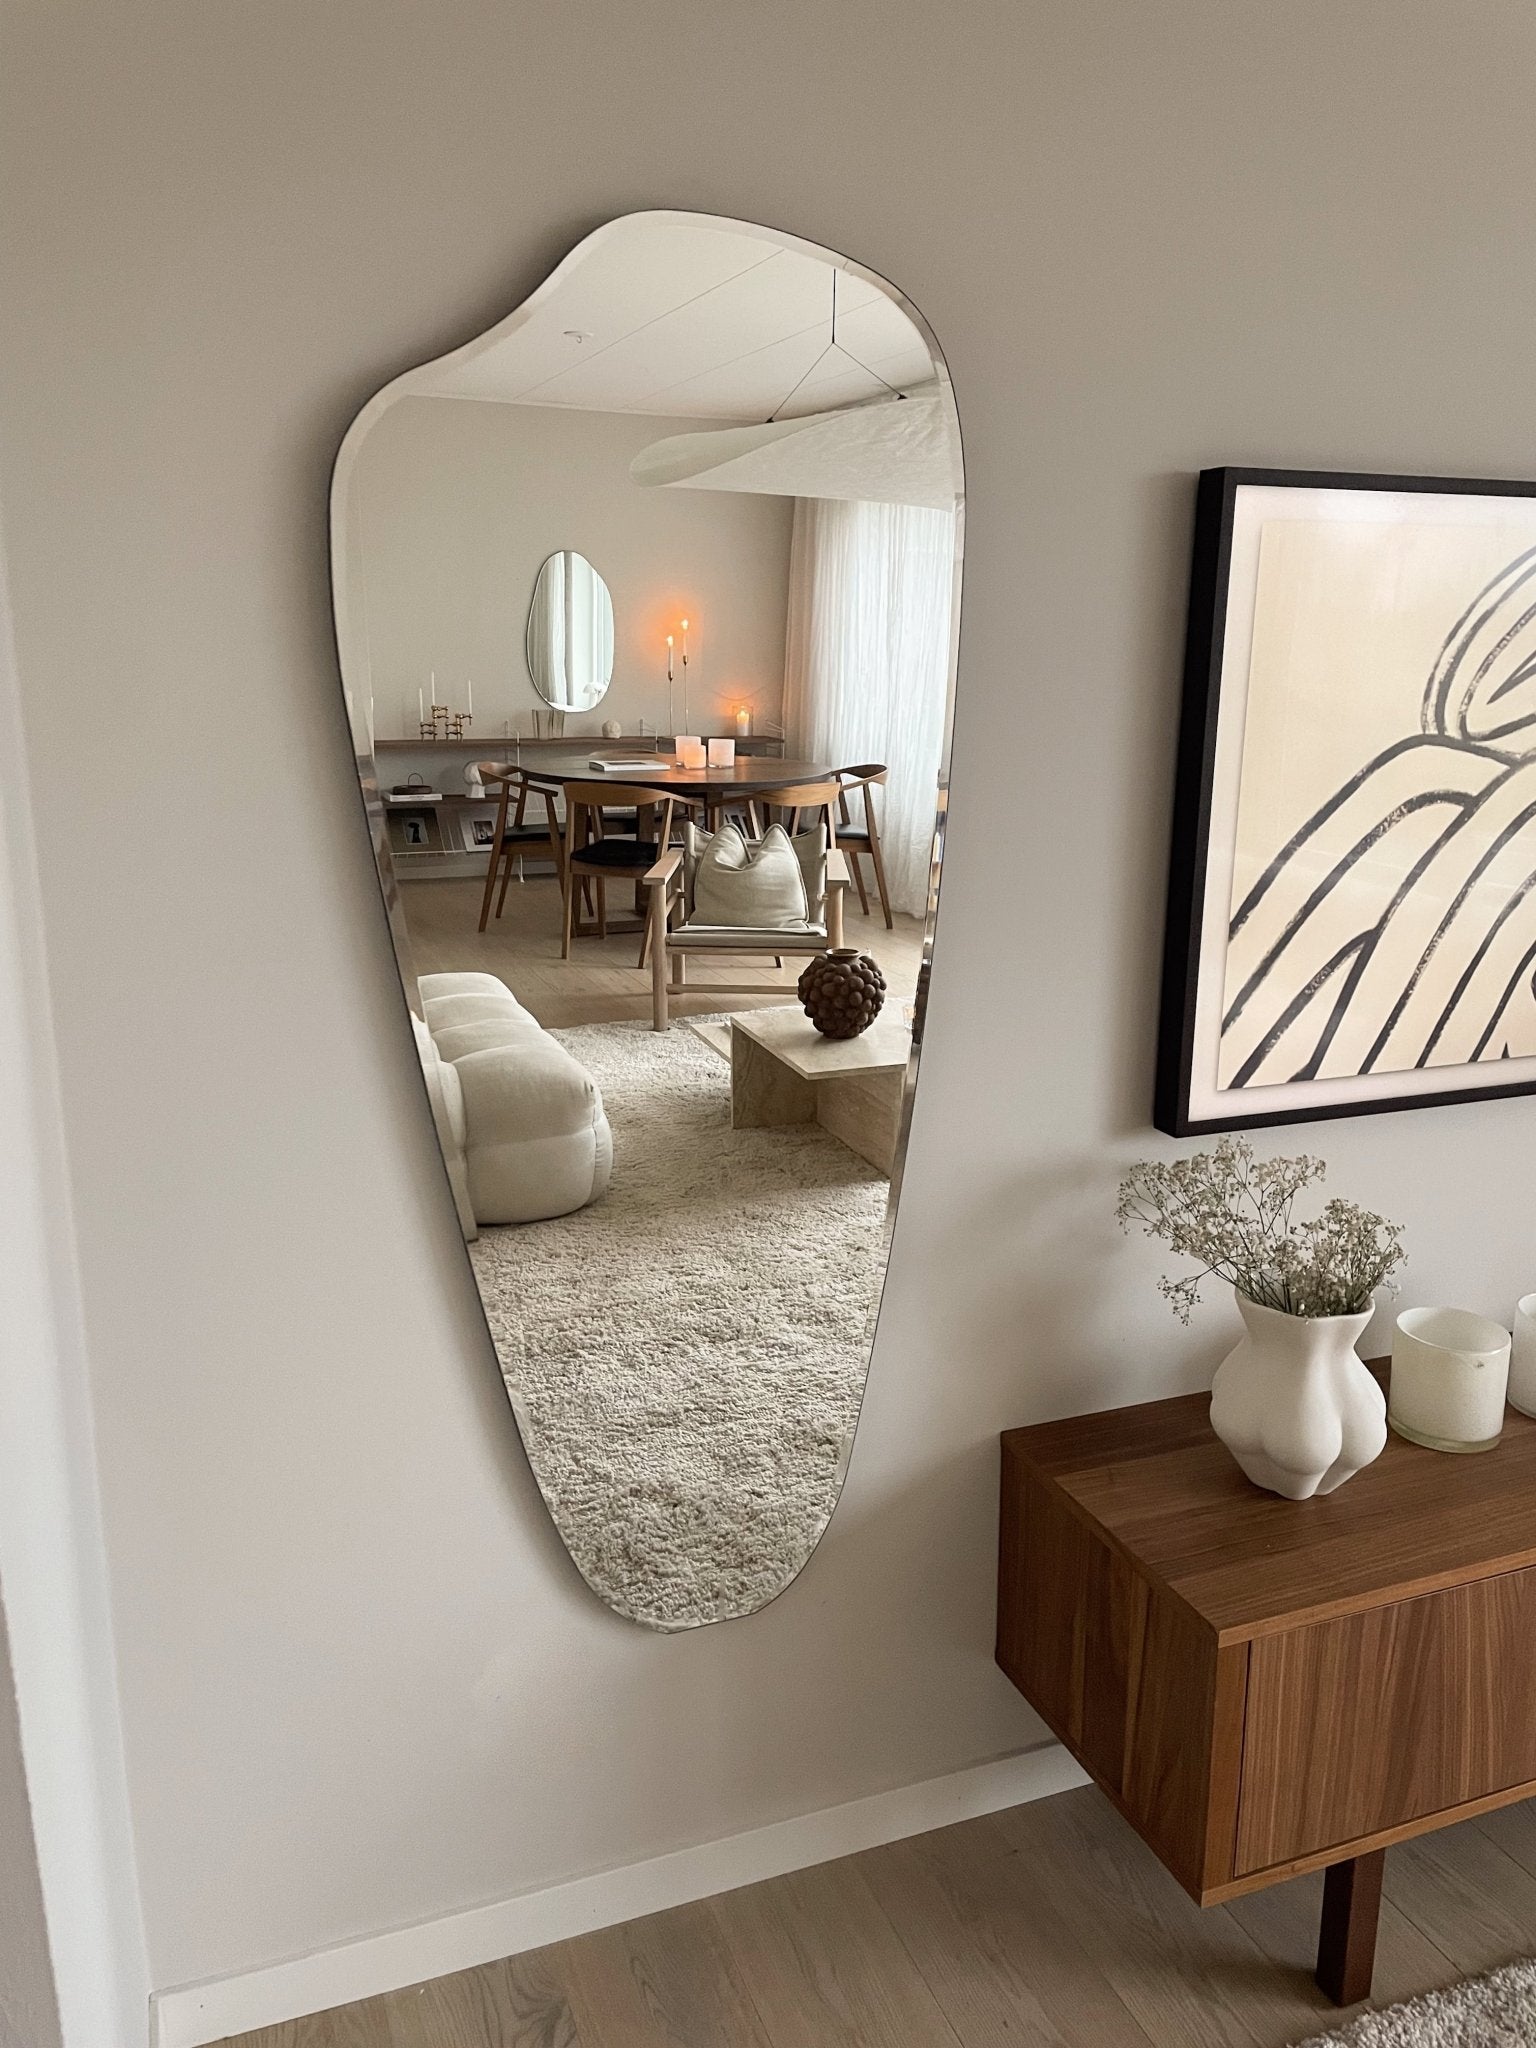 Virgil Mirror | 140 x 60 cm - Blossholm